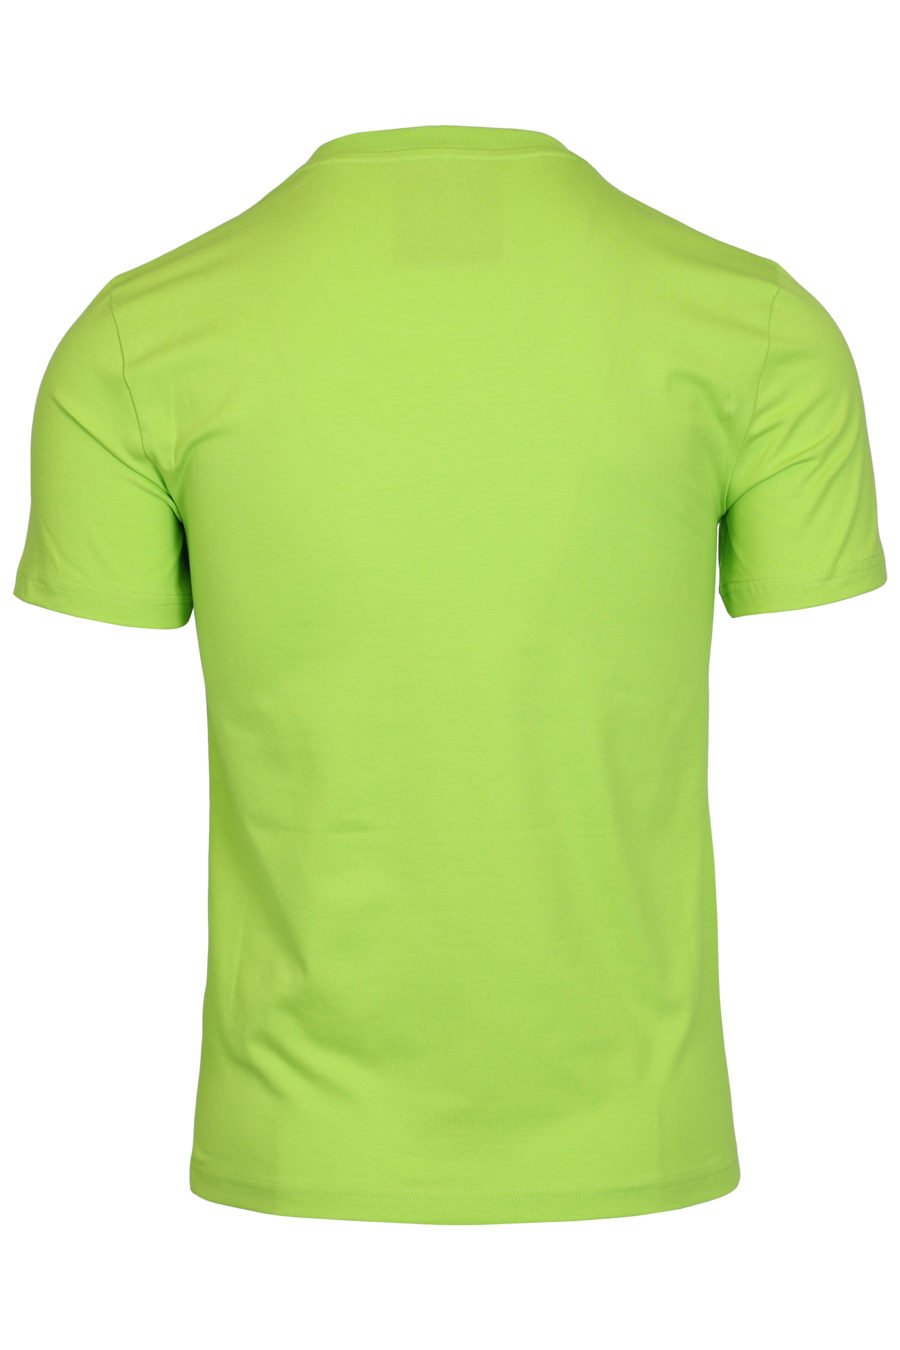 Camiseta verde fluor logo blanco y negro - IMG 1023